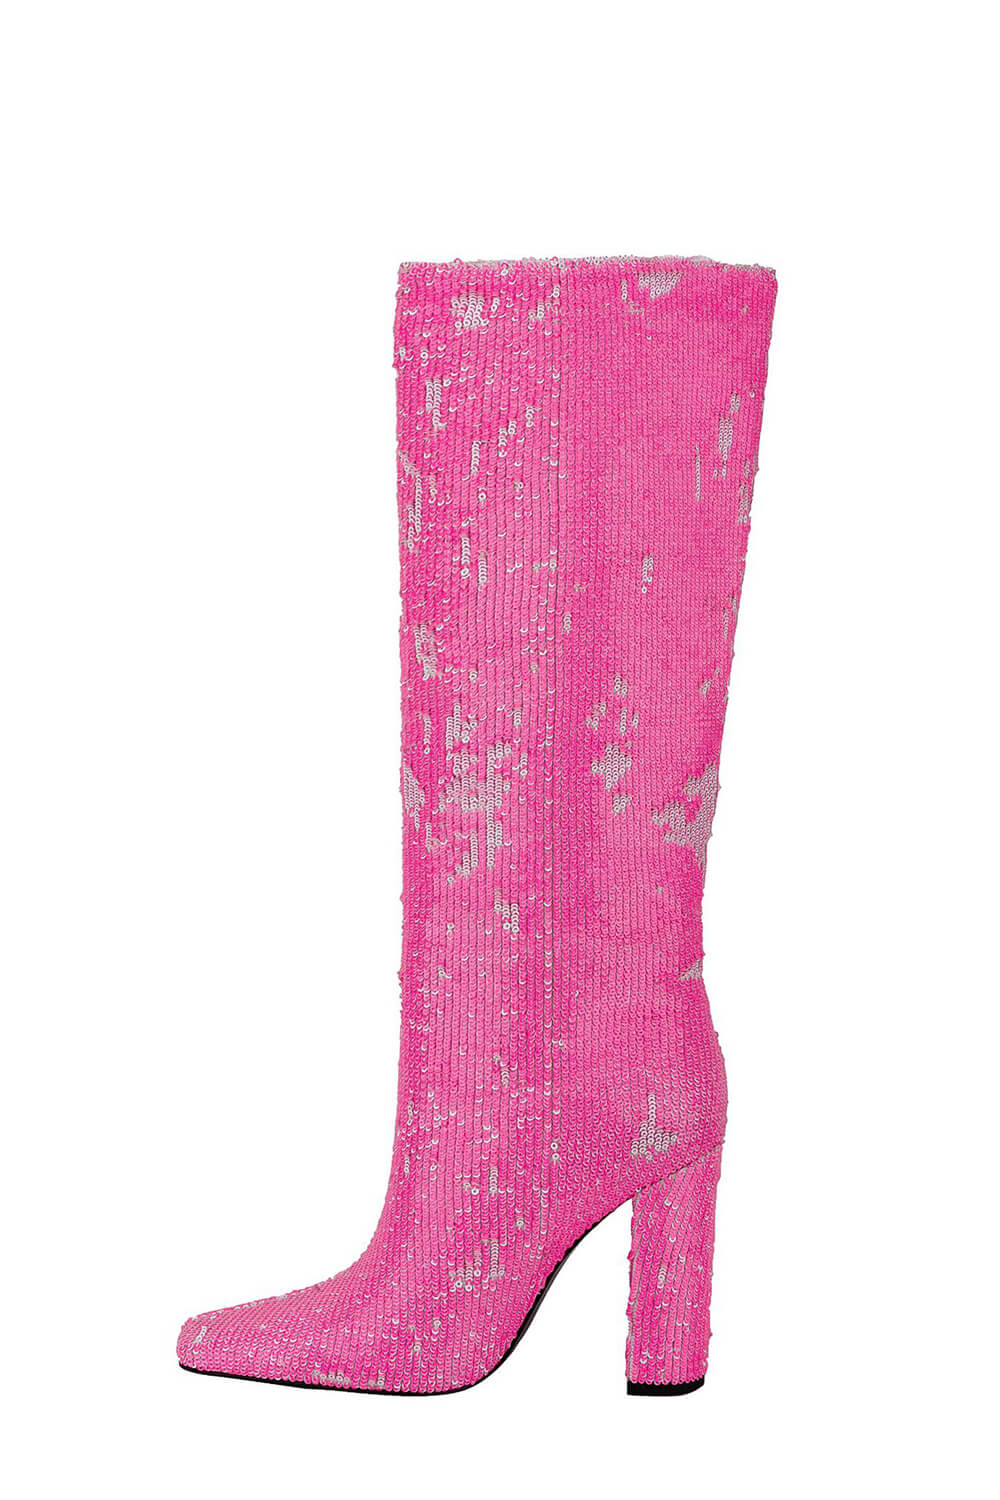 Sequin Knee High Square Toe Block Heel Long Boots - Hot Pink